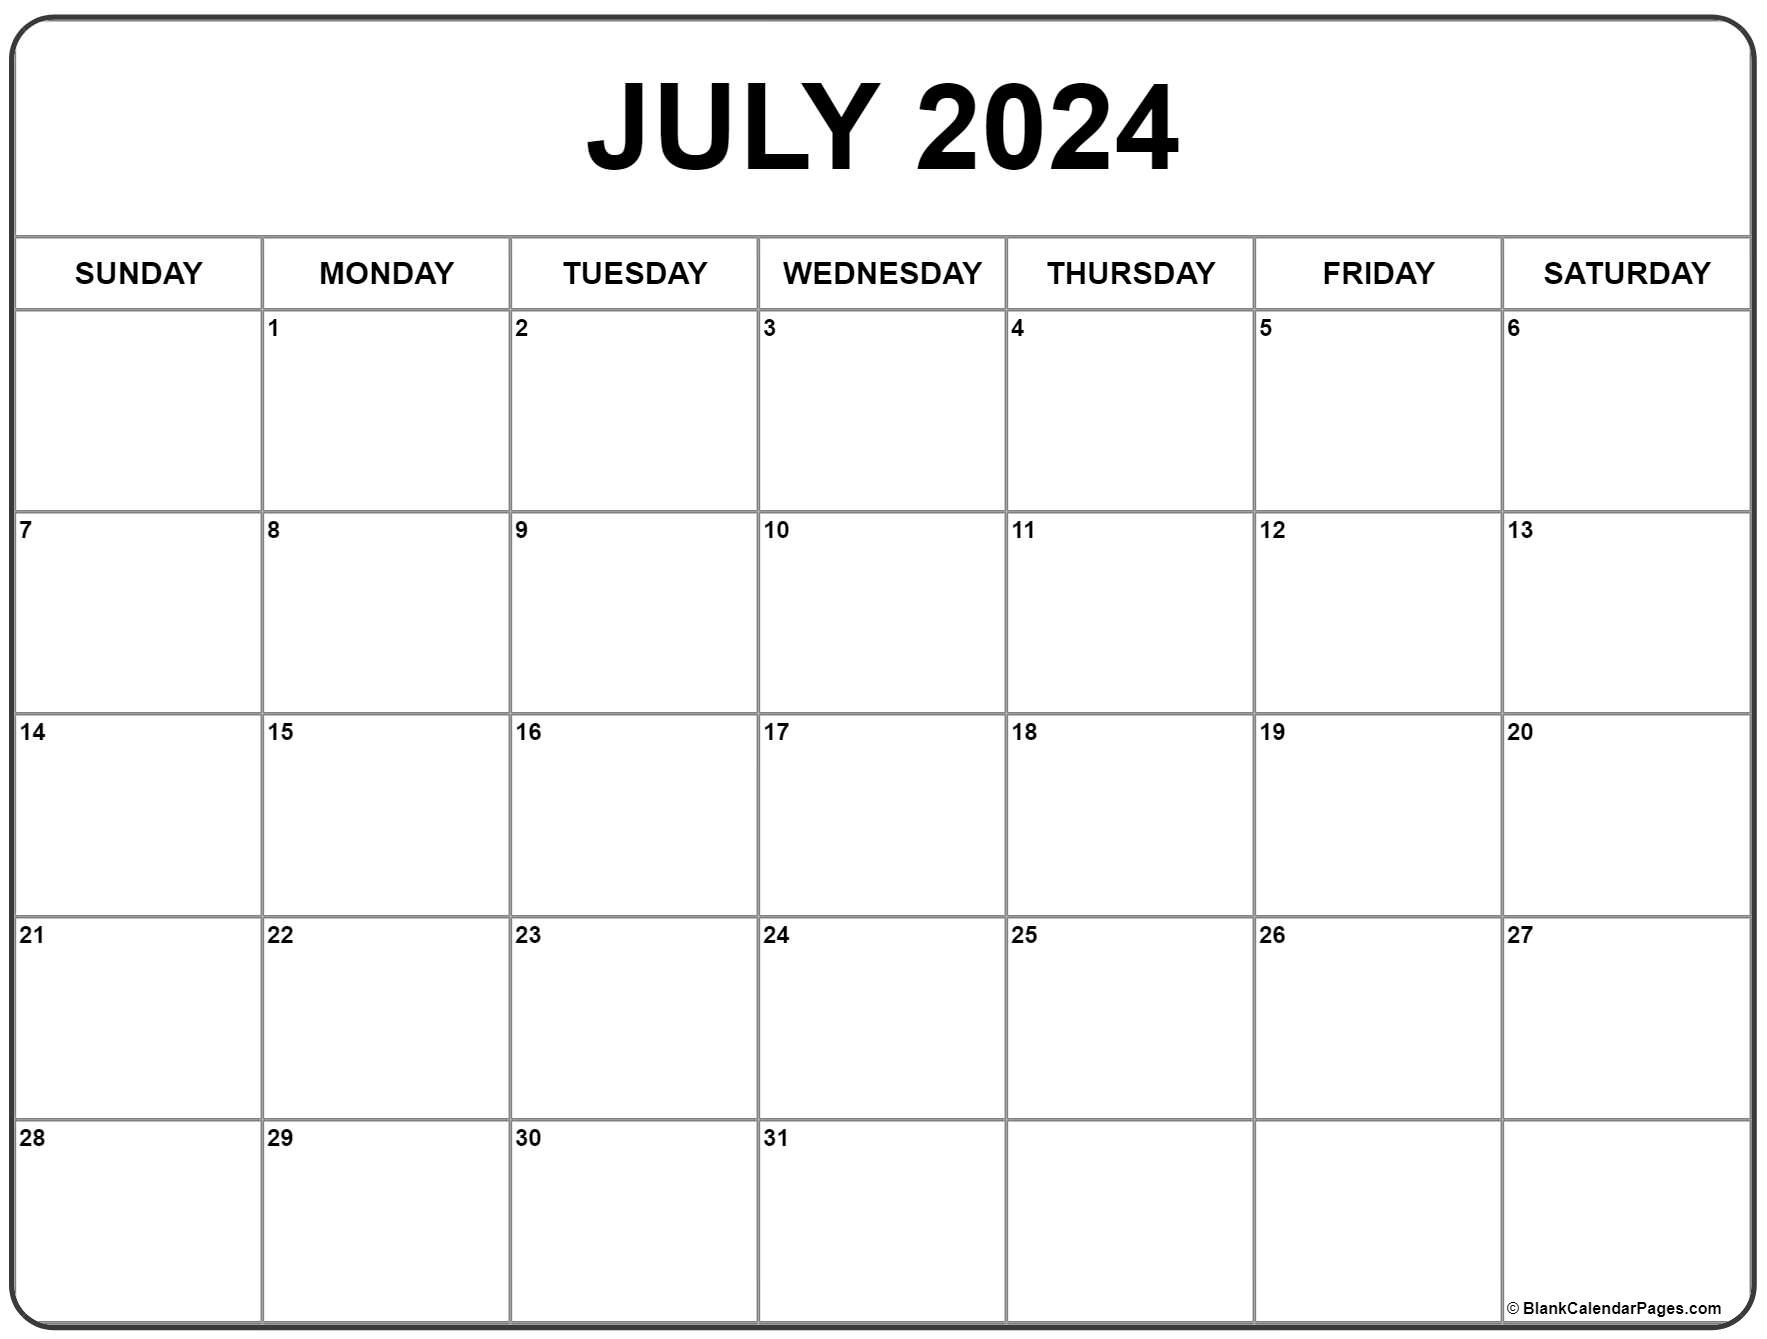 July 2024 Calendar | Free Printable Calendar for Printable July Calendar 2024